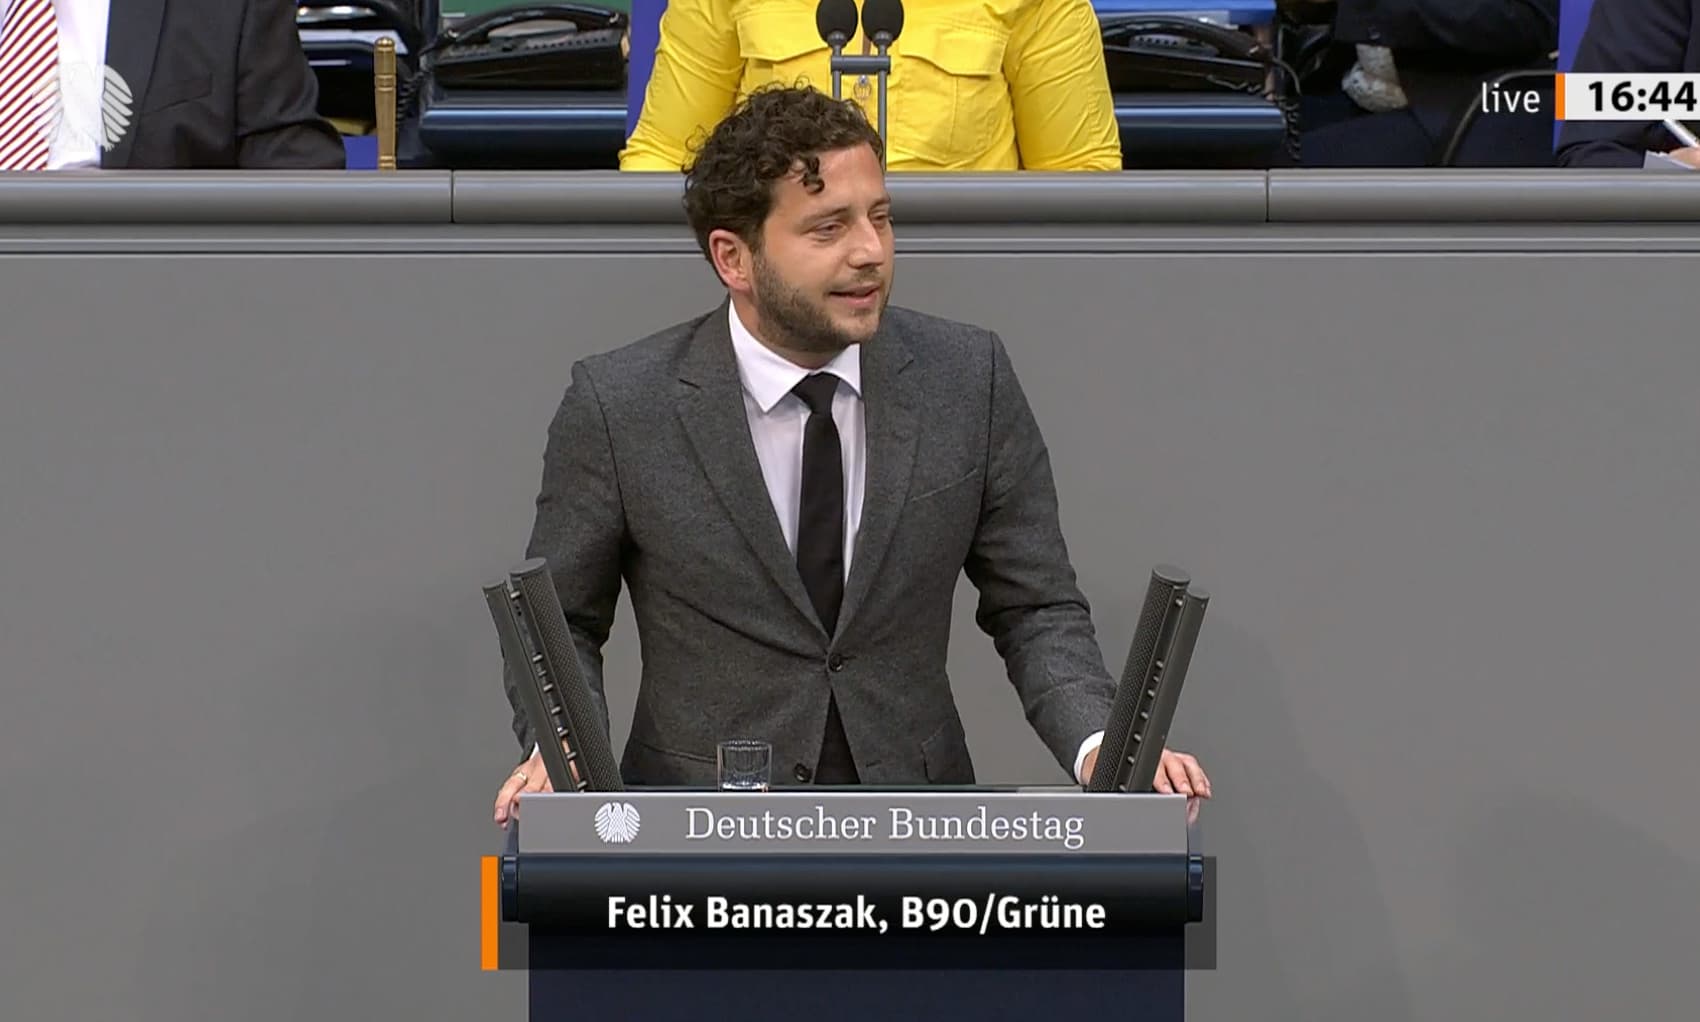 Felix Banaszak im Bundestag am Rednerpult